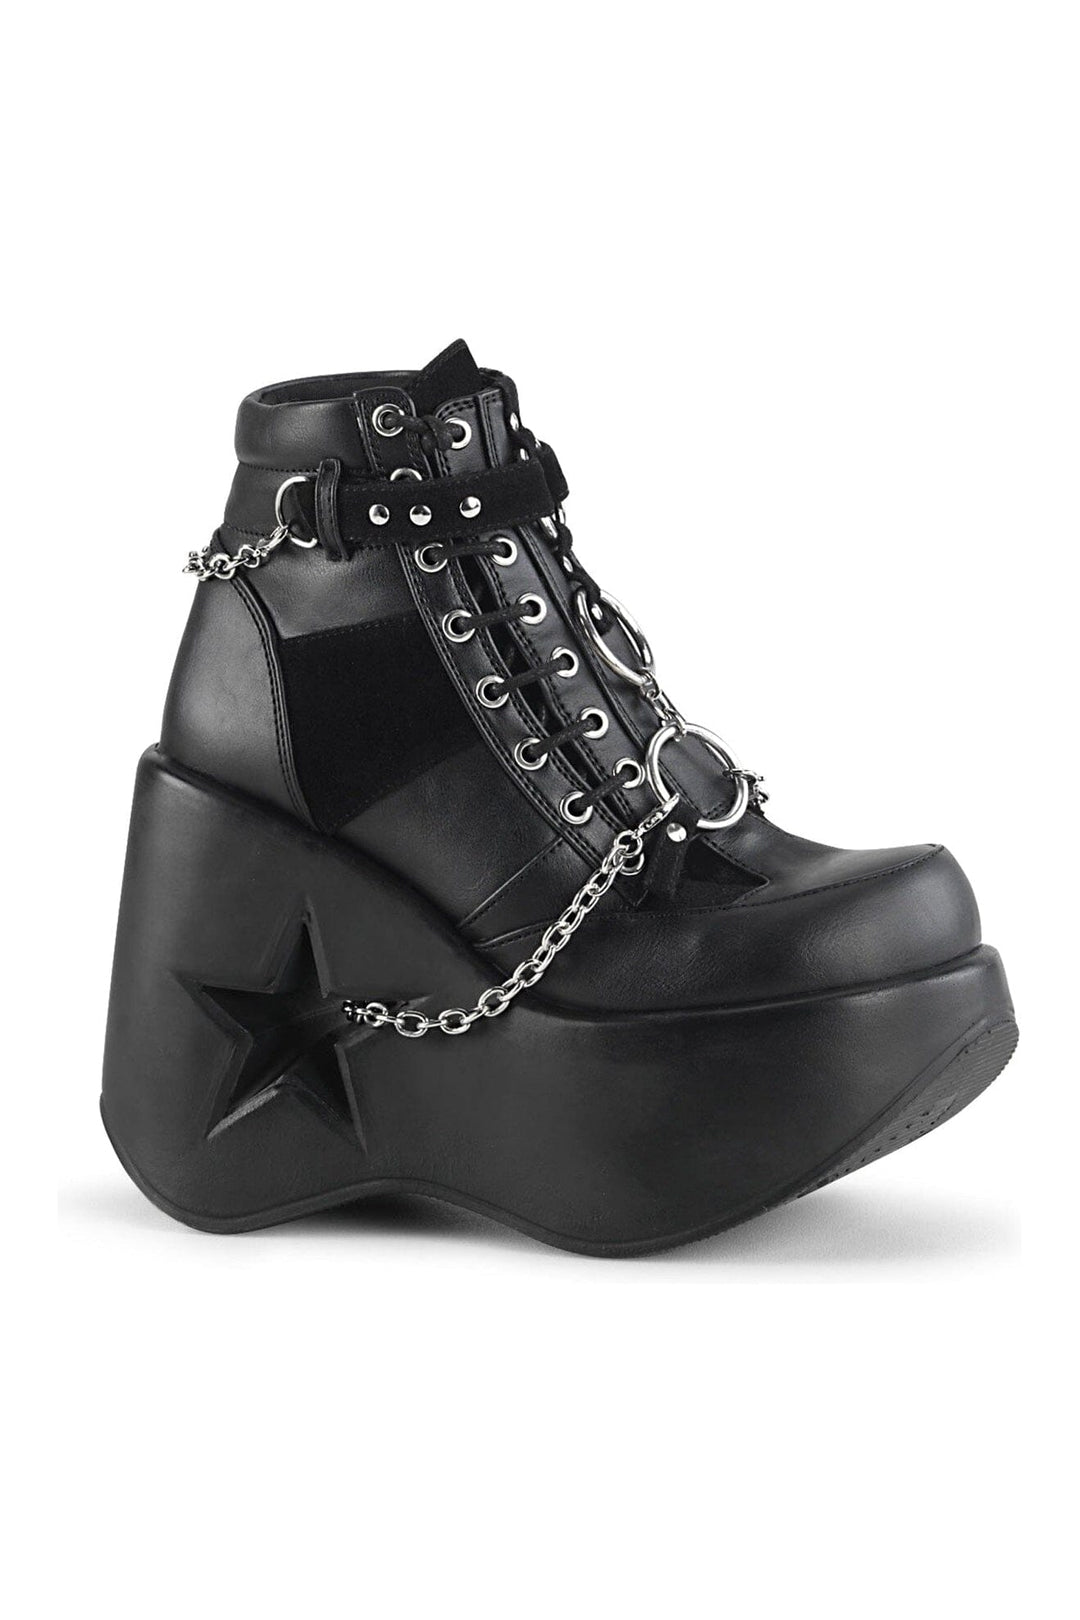 DYNAMITE-101 Black Hologram Patent Ankle Boot-Ankle Boots-Demonia-Black-11-Hologram Patent-SEXYSHOES.COM